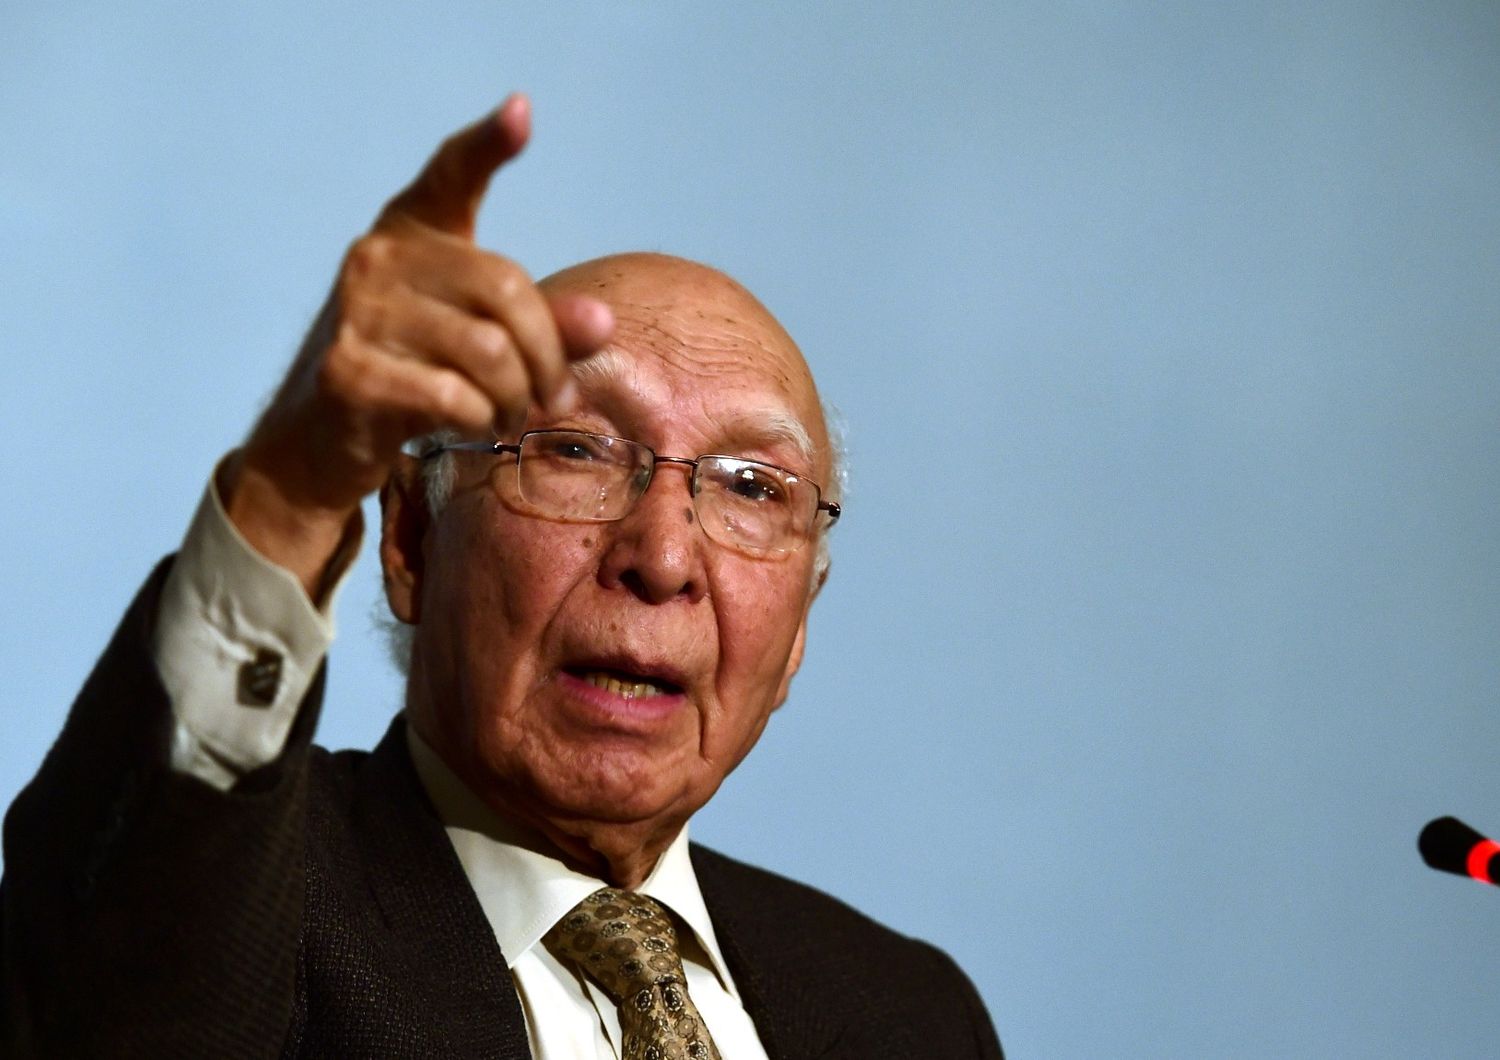 Pakistan - Sartaj Aziz, consigliere del premier (Afp)